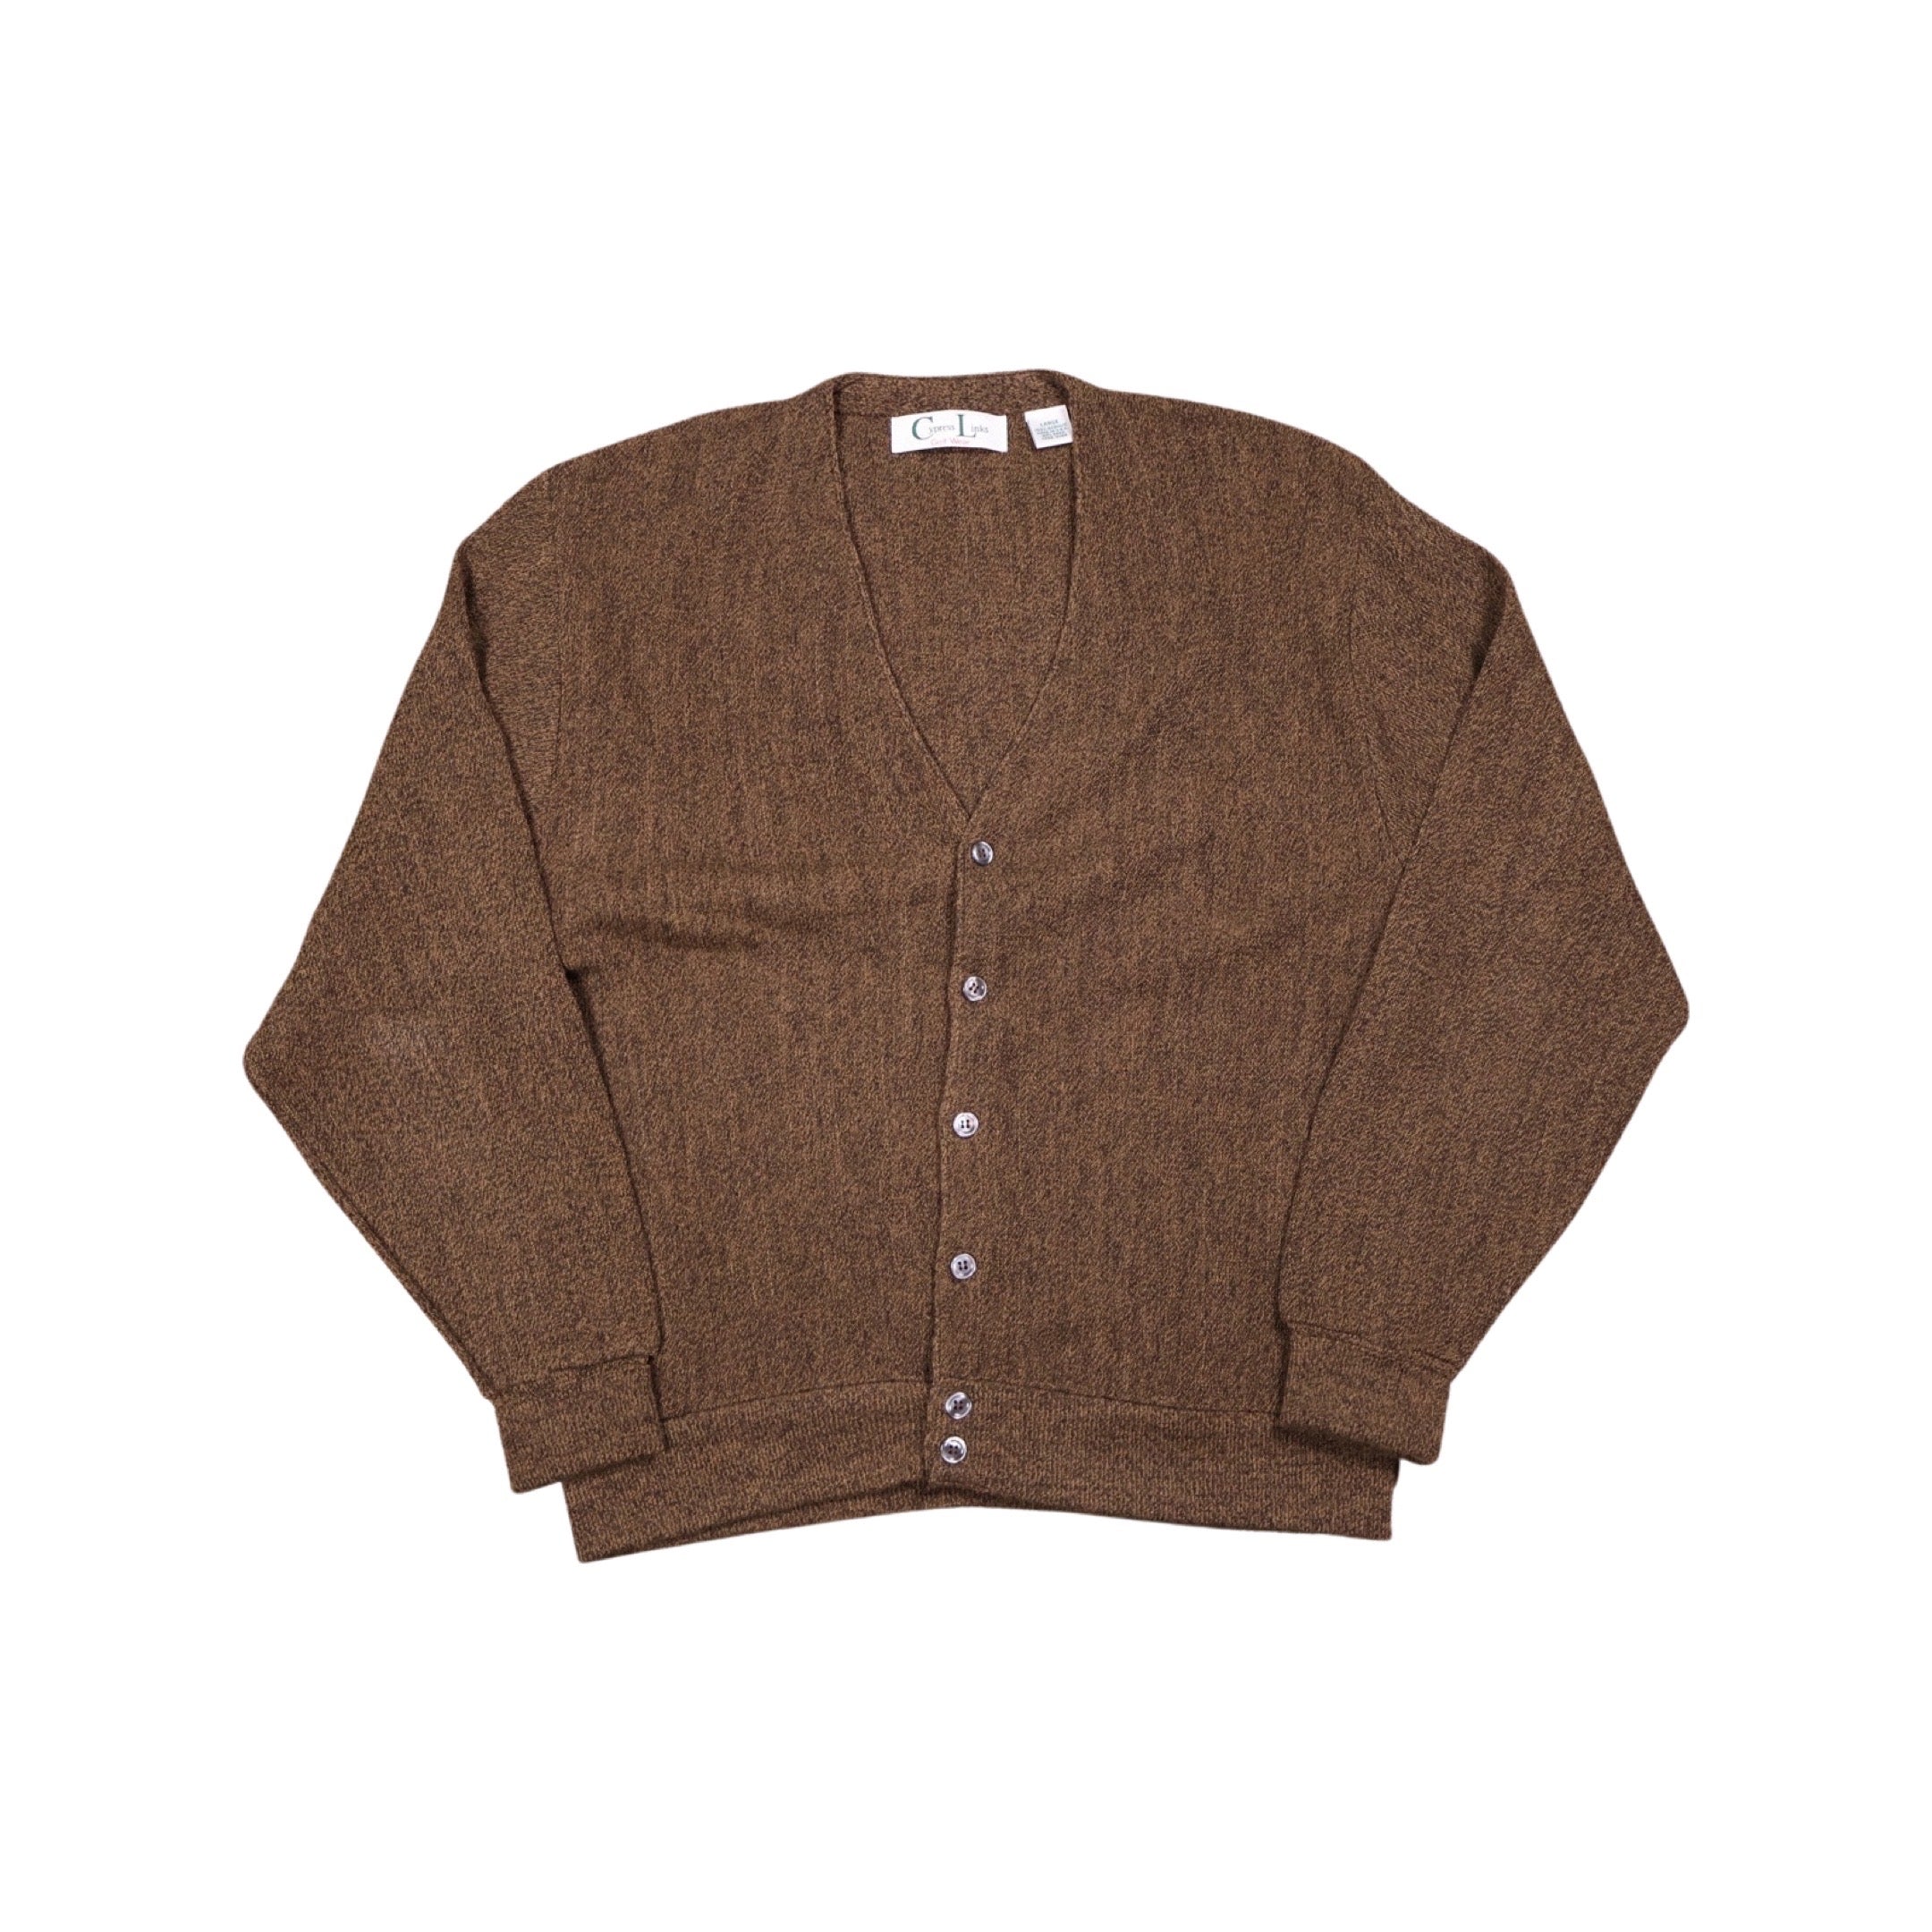 Brown 90s Knit Cardigan (Large)